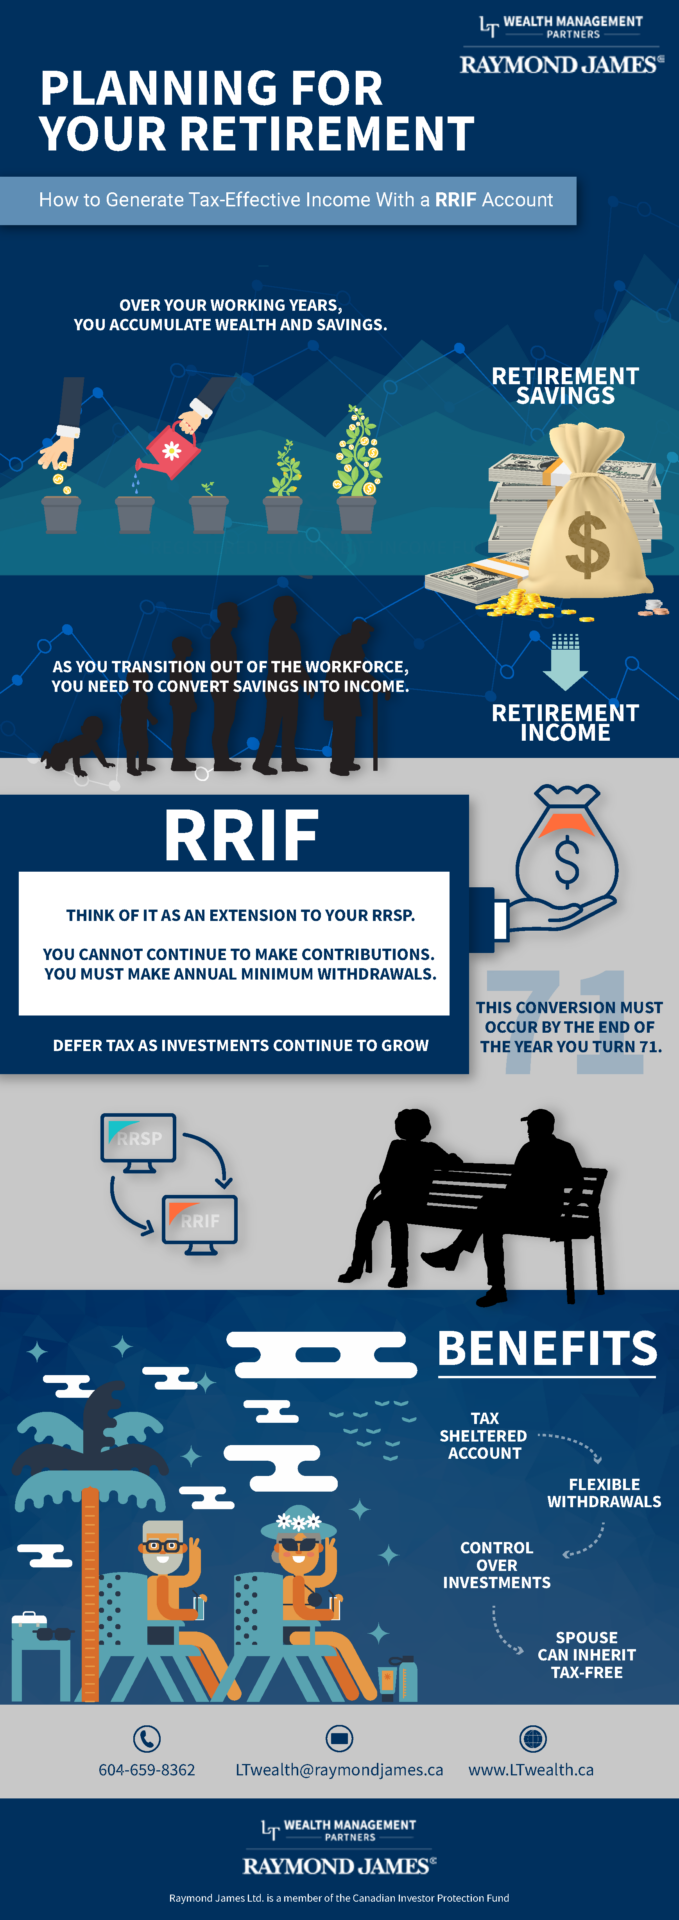 RRIF account Infographic